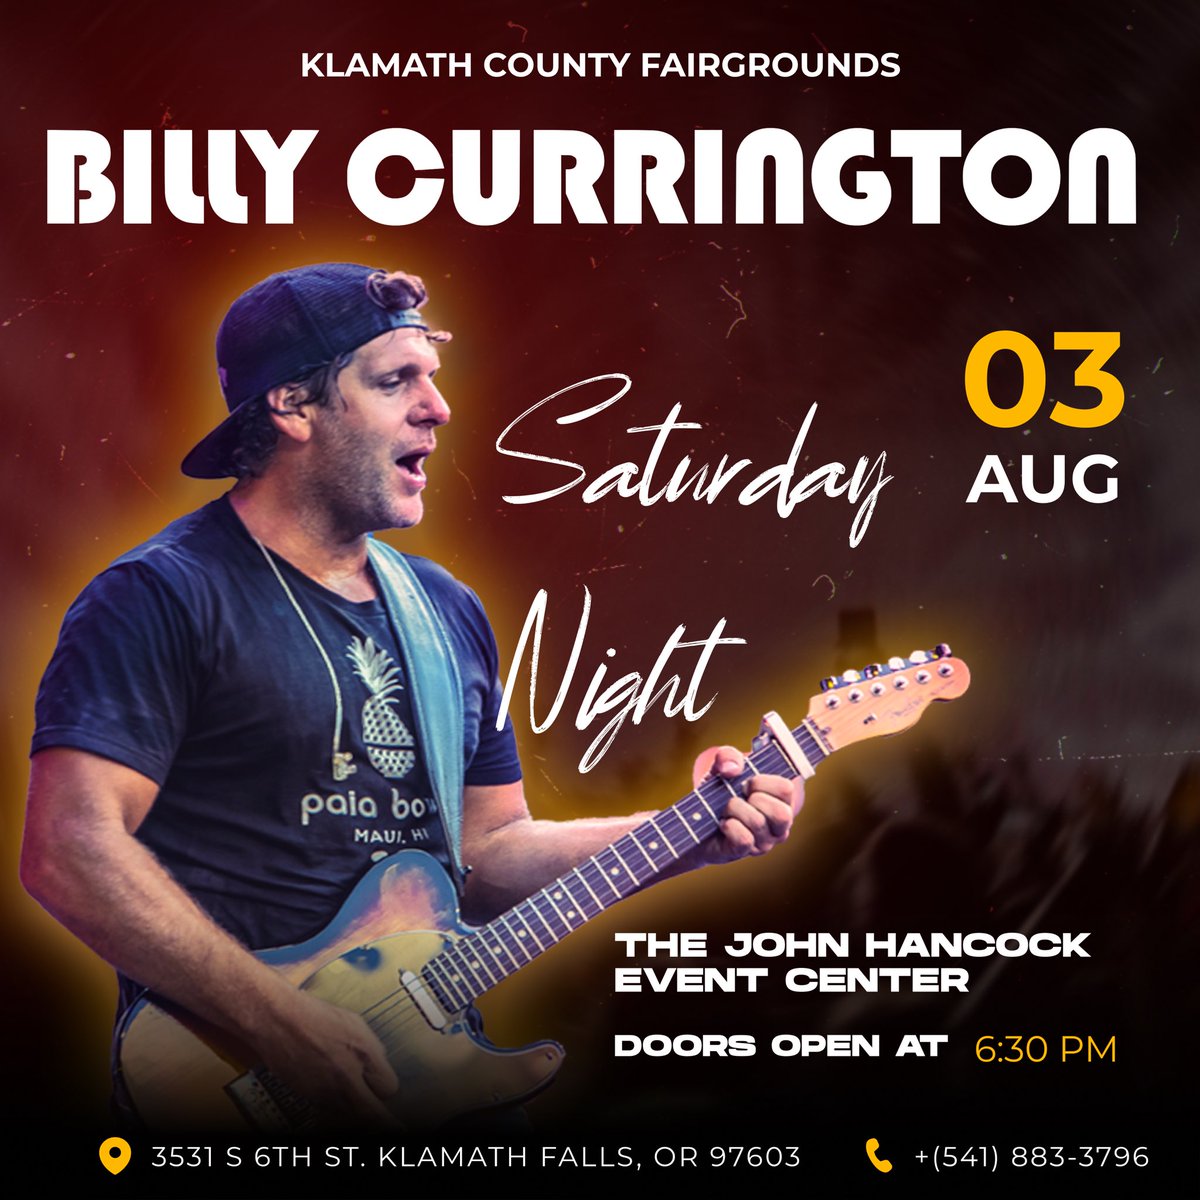 can’t wait oregon, tickets on sale friday 🚀 billycurrington.com/tour